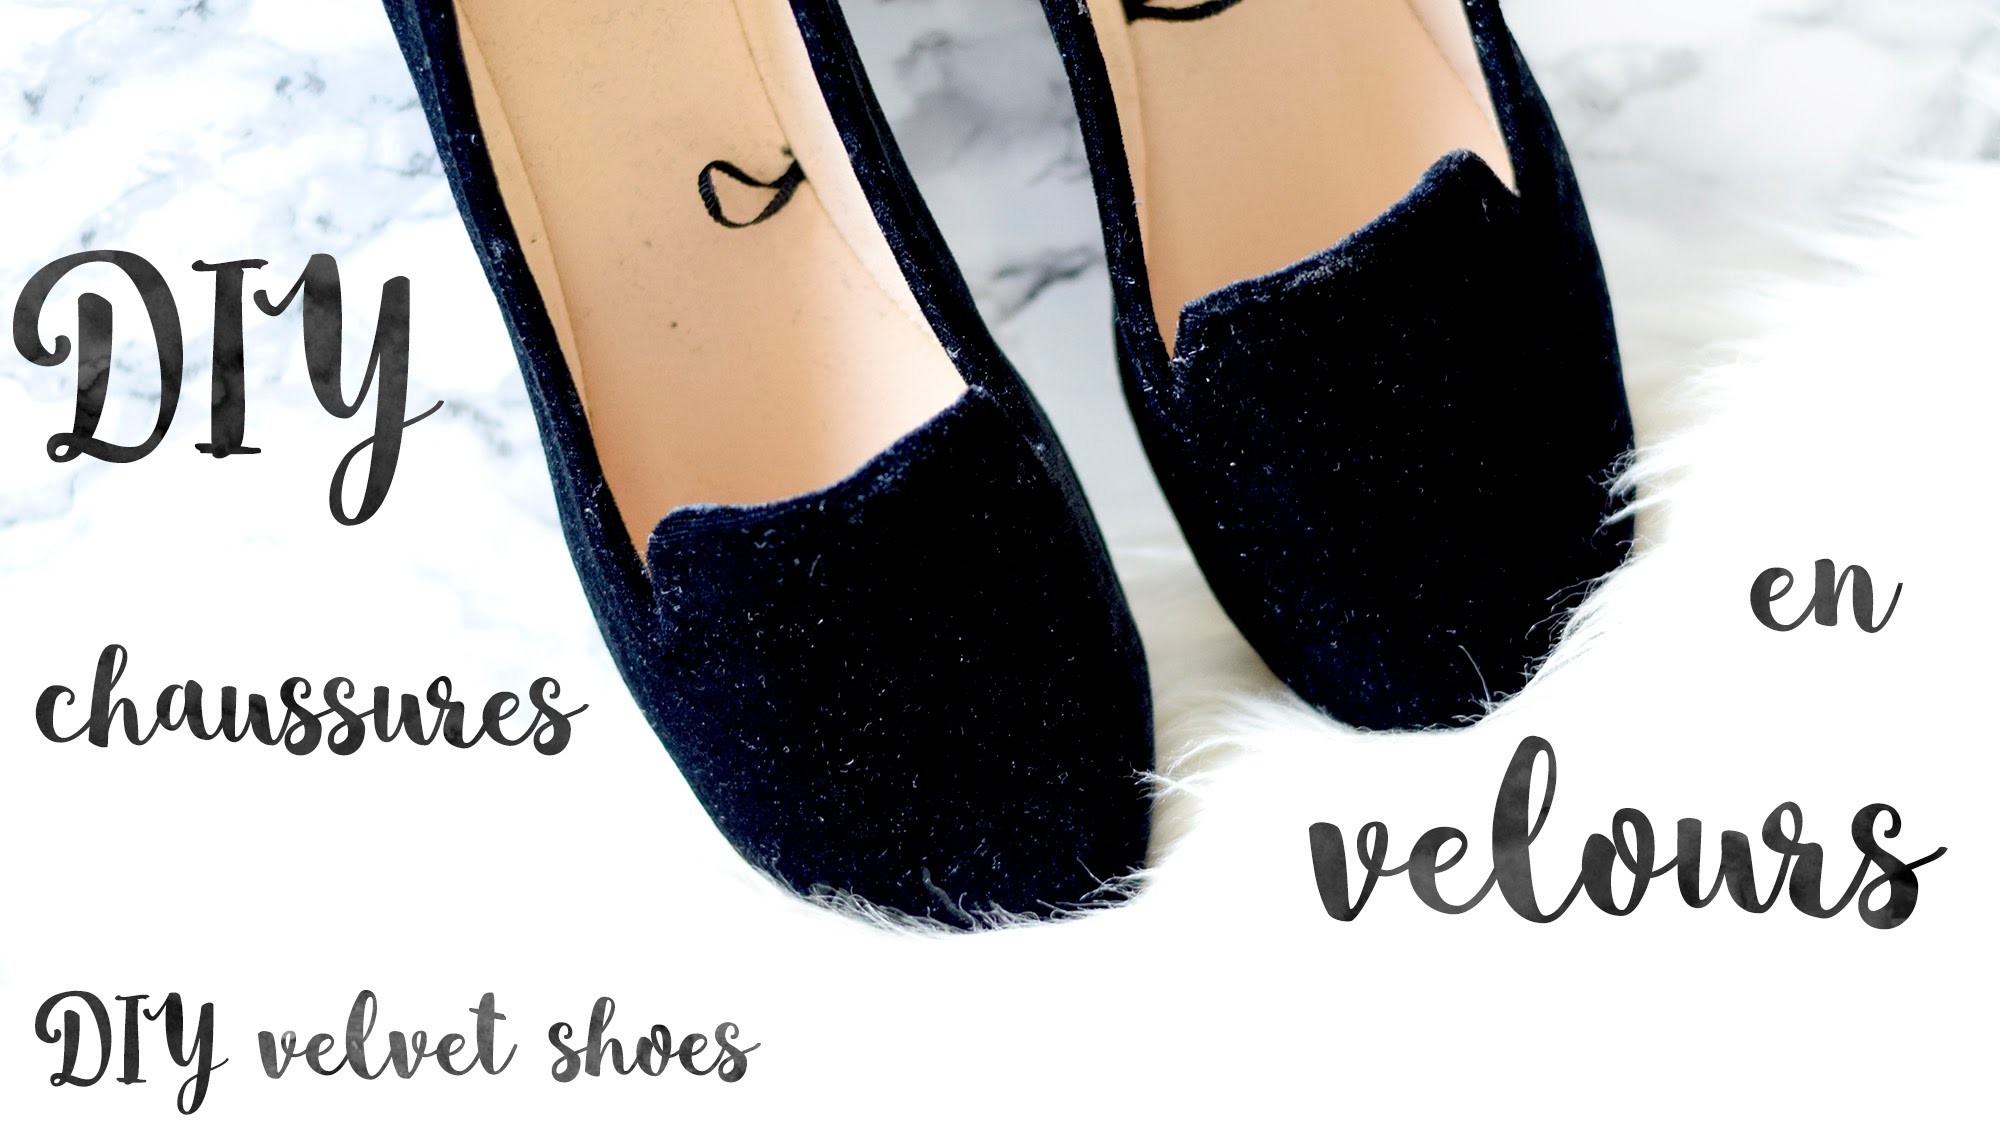 DIY chaussures en velours. DIY velvet shoes